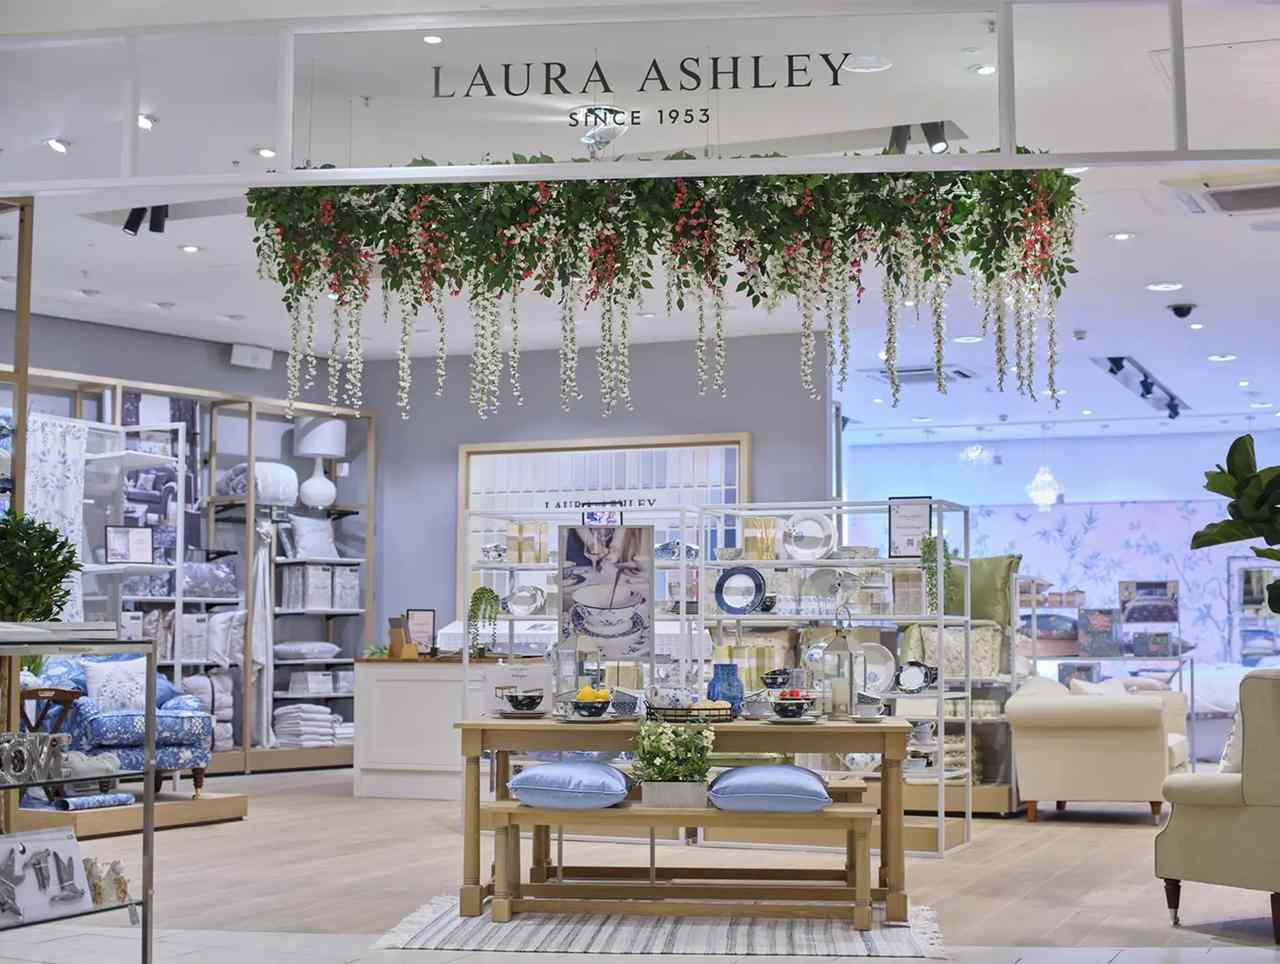 Laura Ashley Store Display